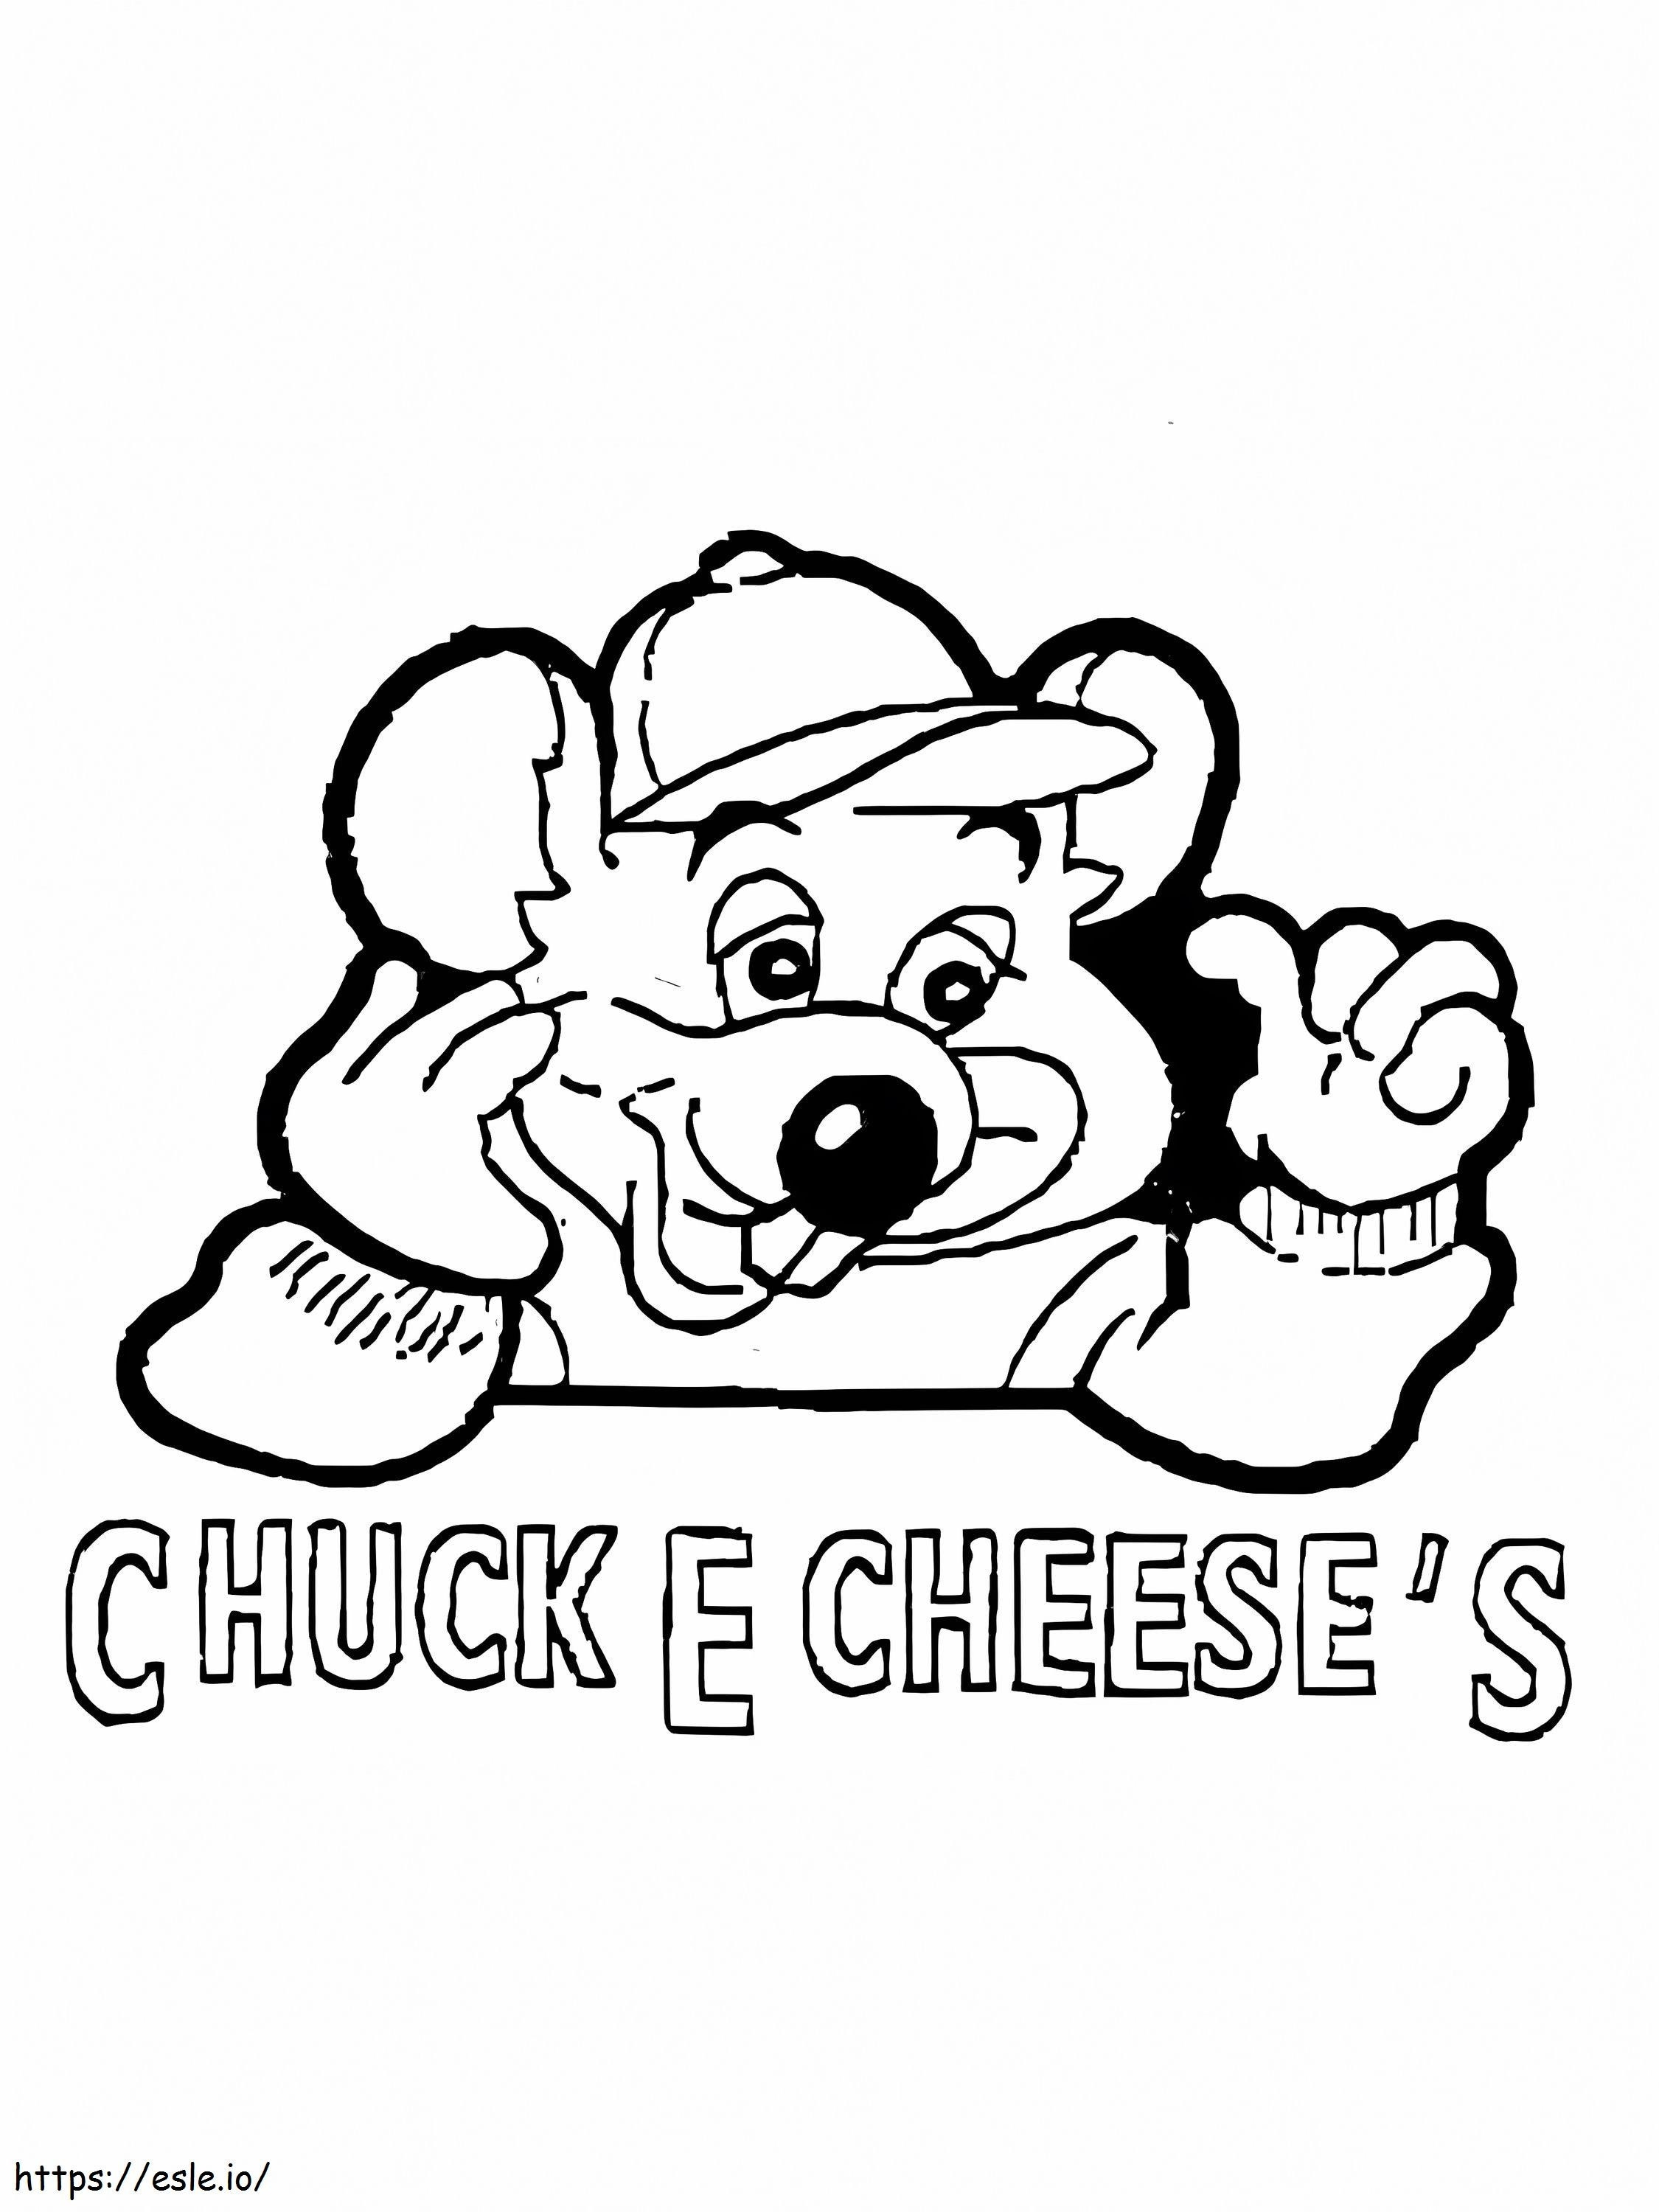 Chuck E. Cheese 7 ausmalbilder